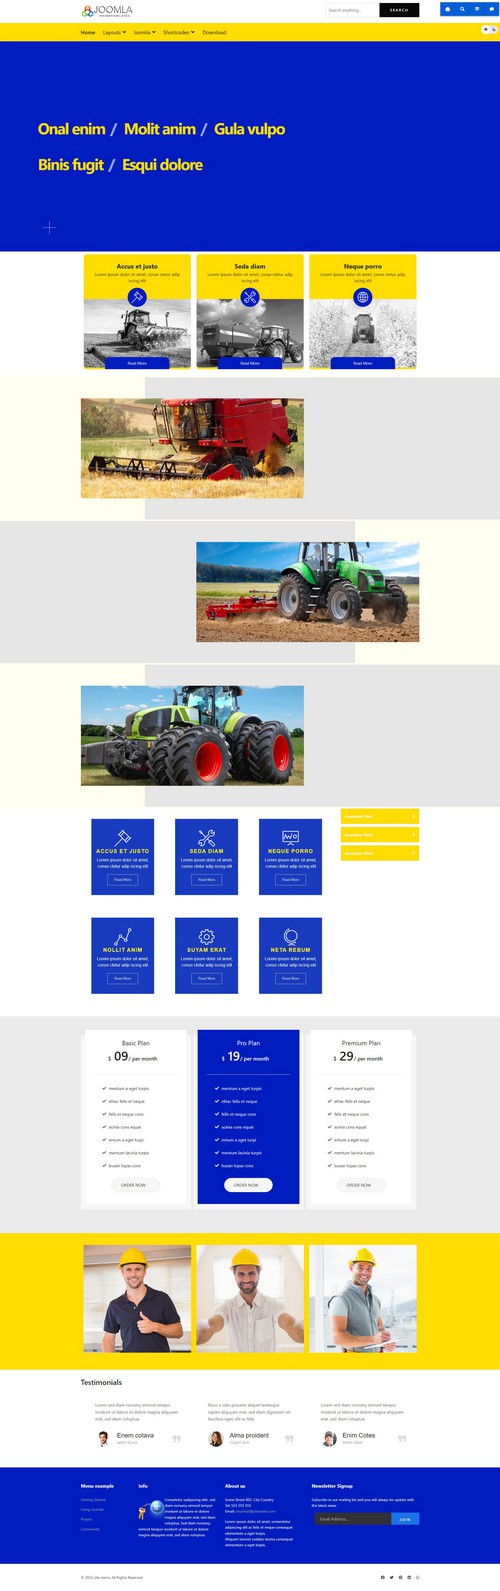 Mx_joomla224 - Professional Agrarian Equipment Joomla 4 Template